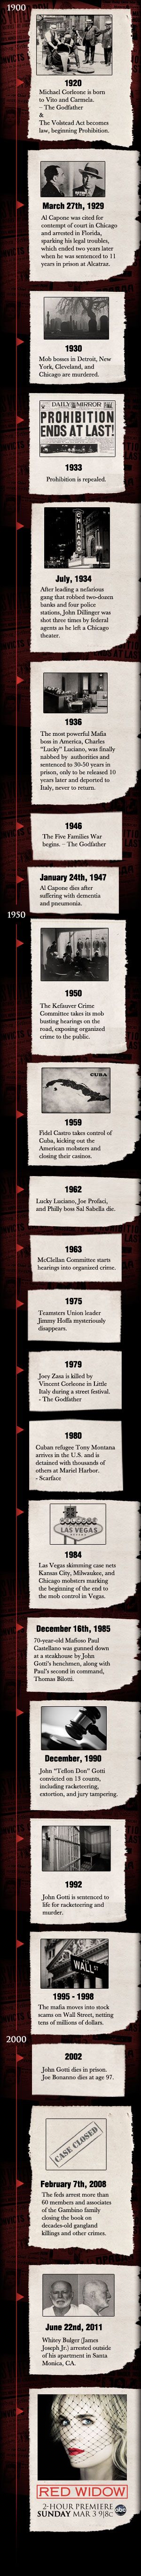 Century of Scandals timeline